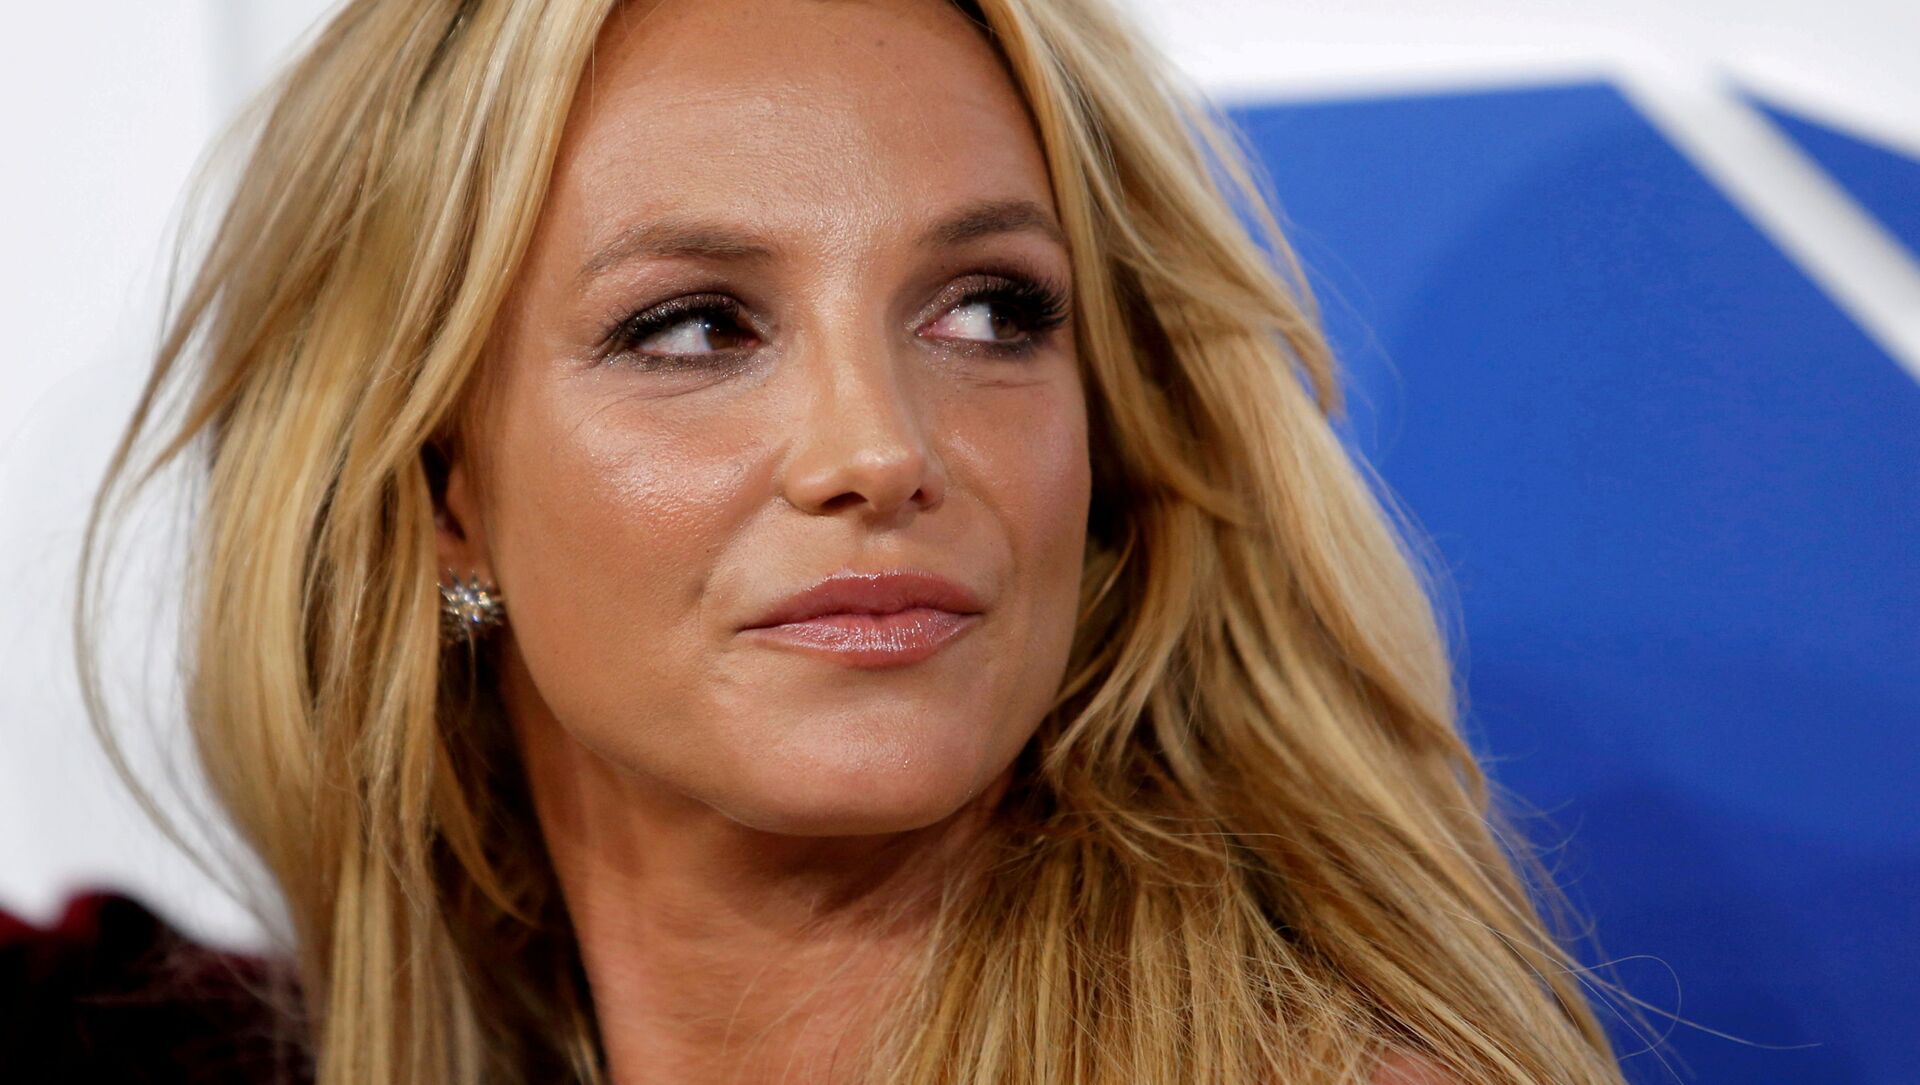 Singer Britney Spears arrives at the 2016 MTV Video Music Awards in New York, U.S., August 28, 2016 - Sputnik International, 1920, 27.06.2021